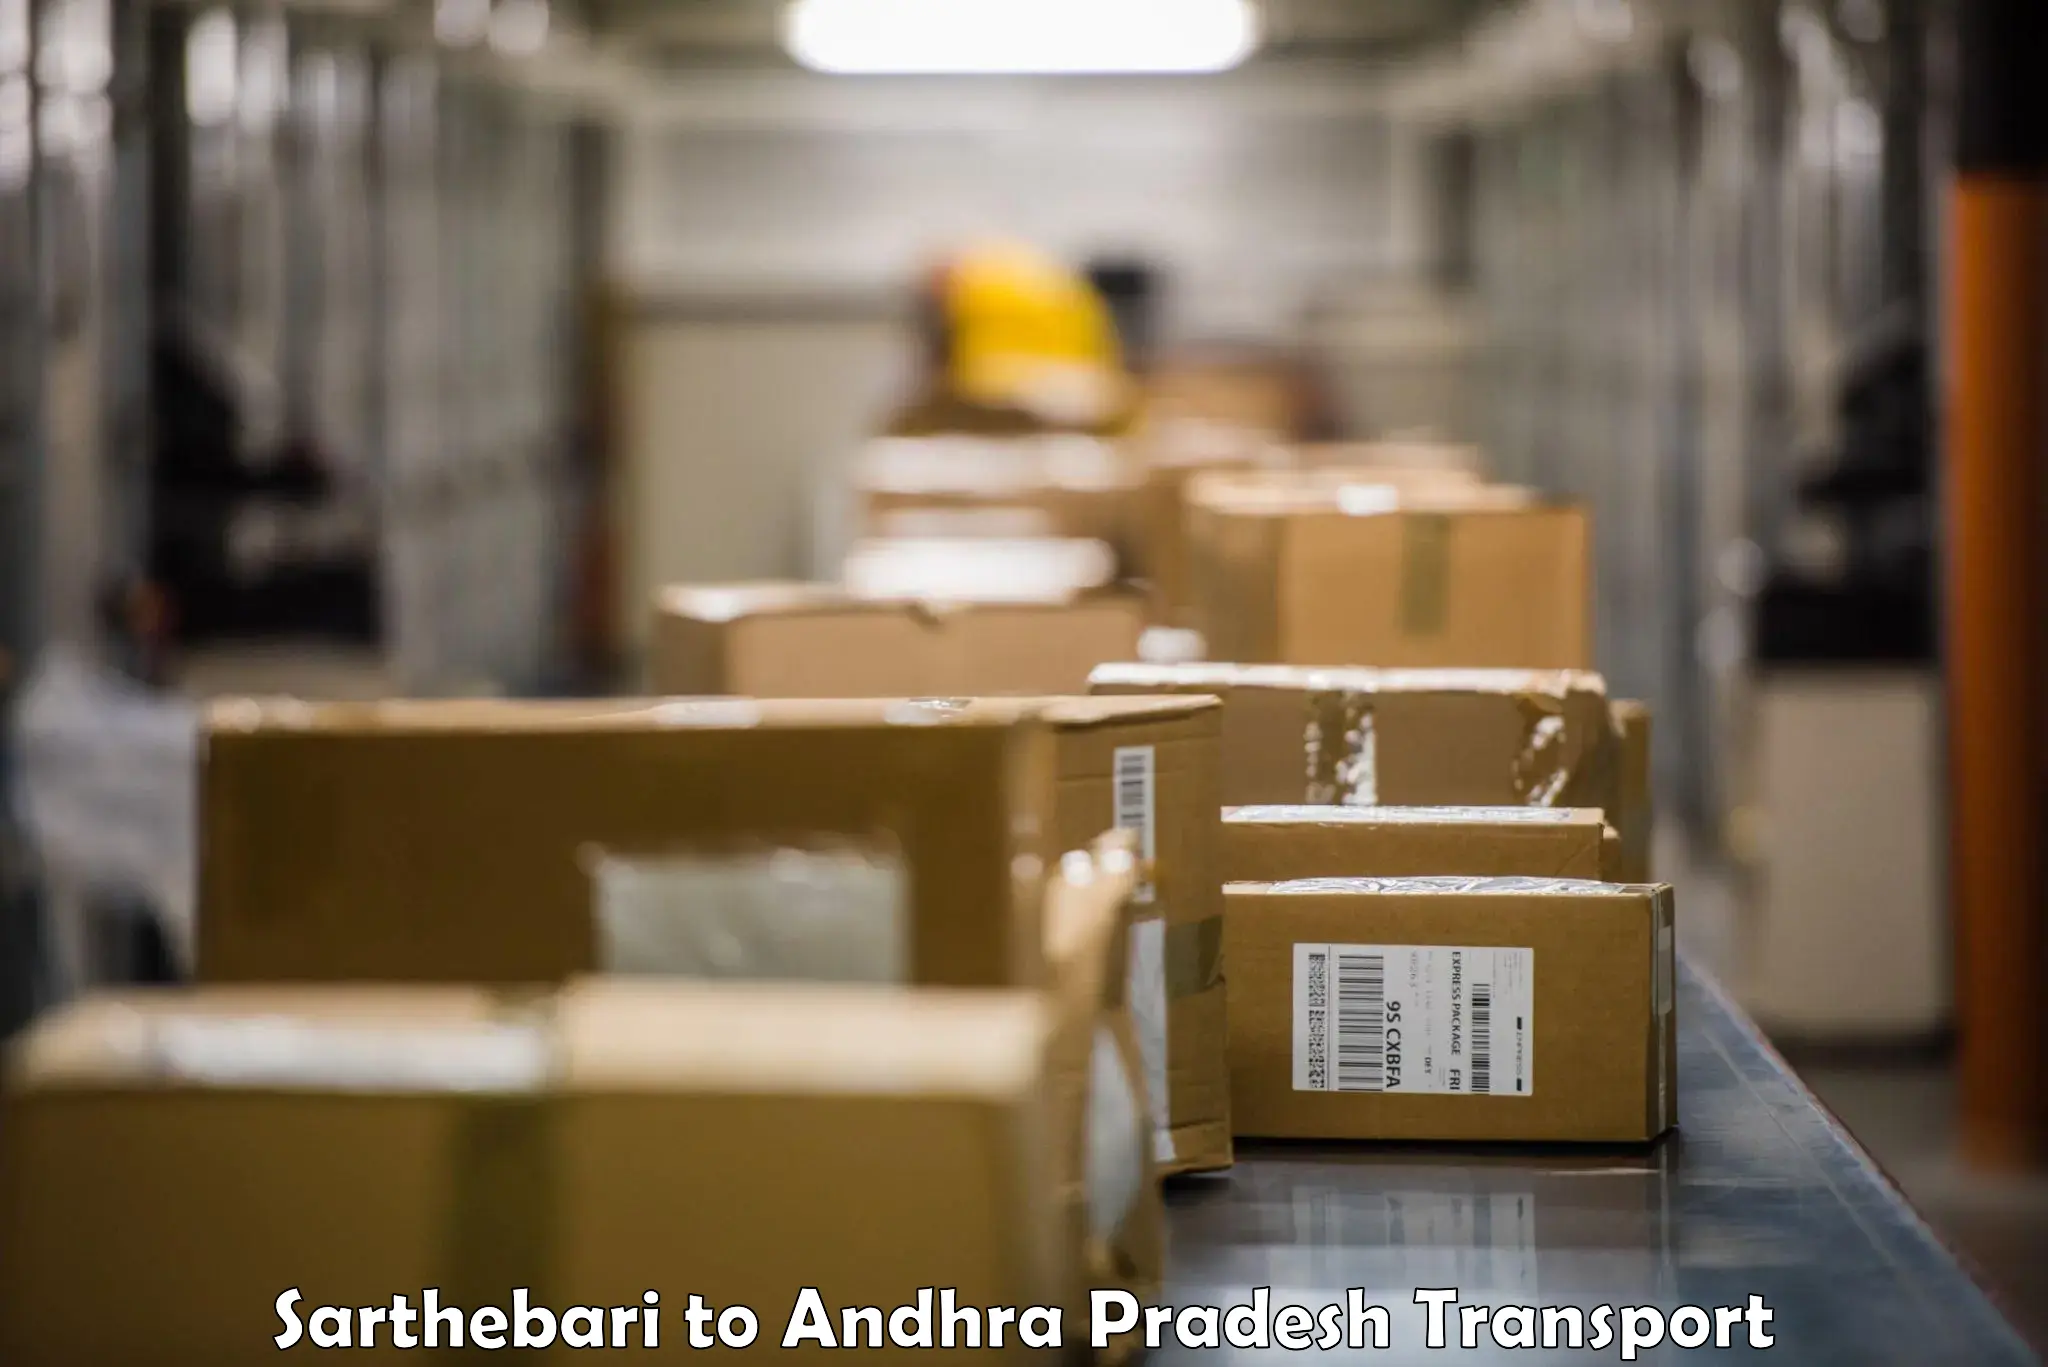 Truck transport companies in India Sarthebari to Machilipatnam